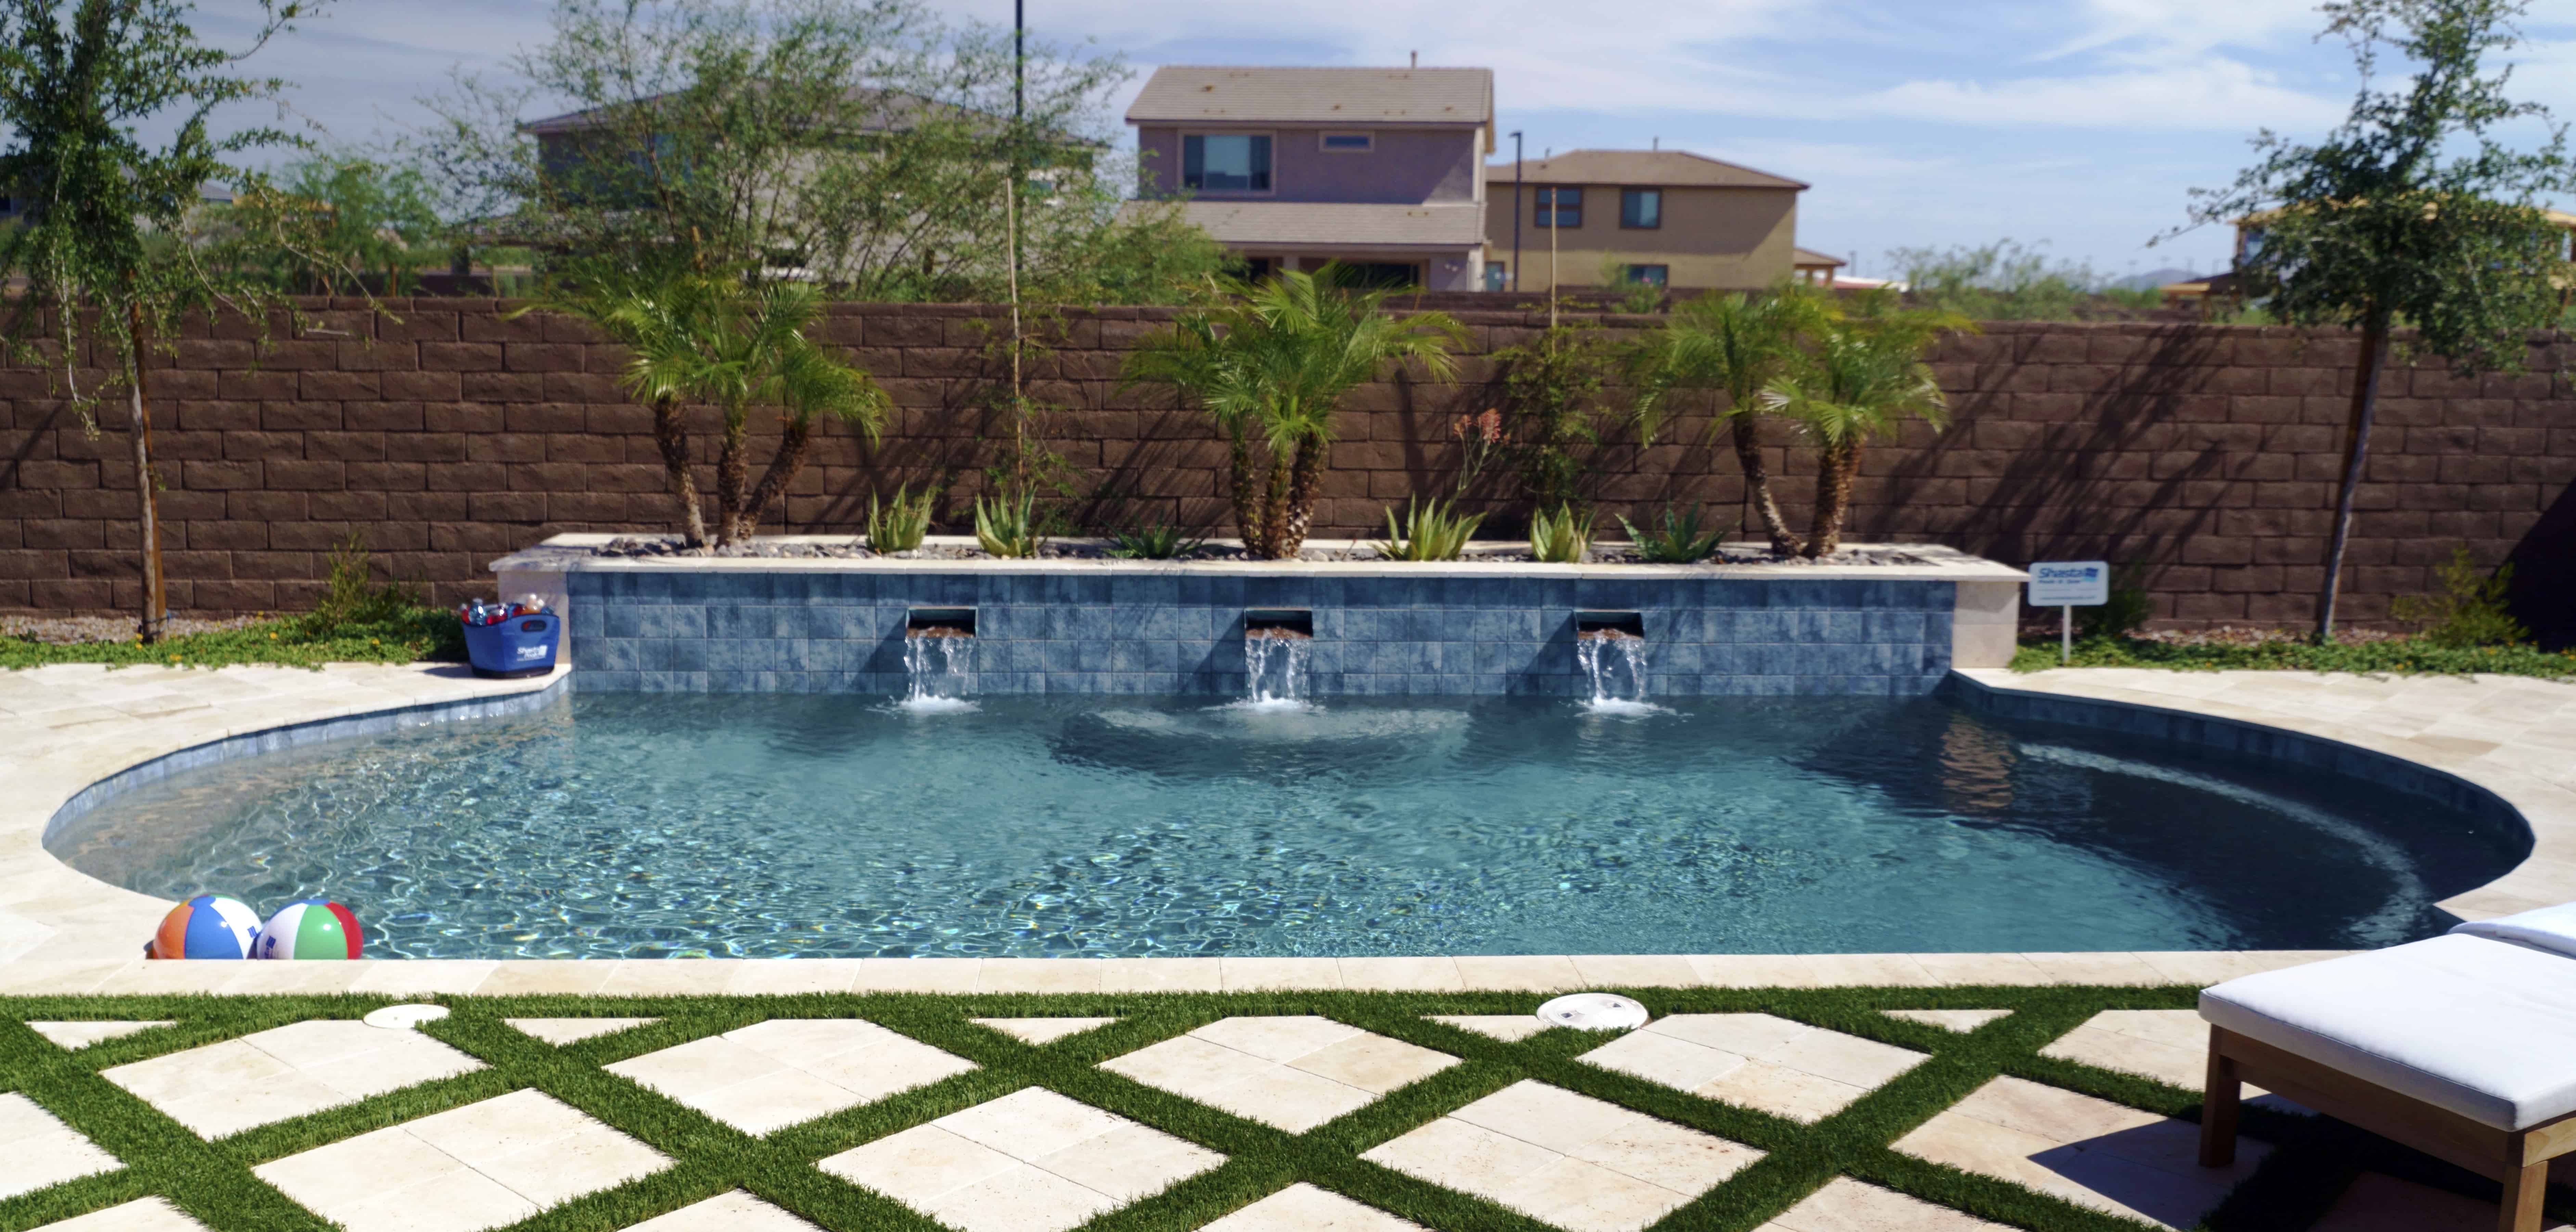 Small Backyard Landscape and Pool Ideas - Shasta Pools